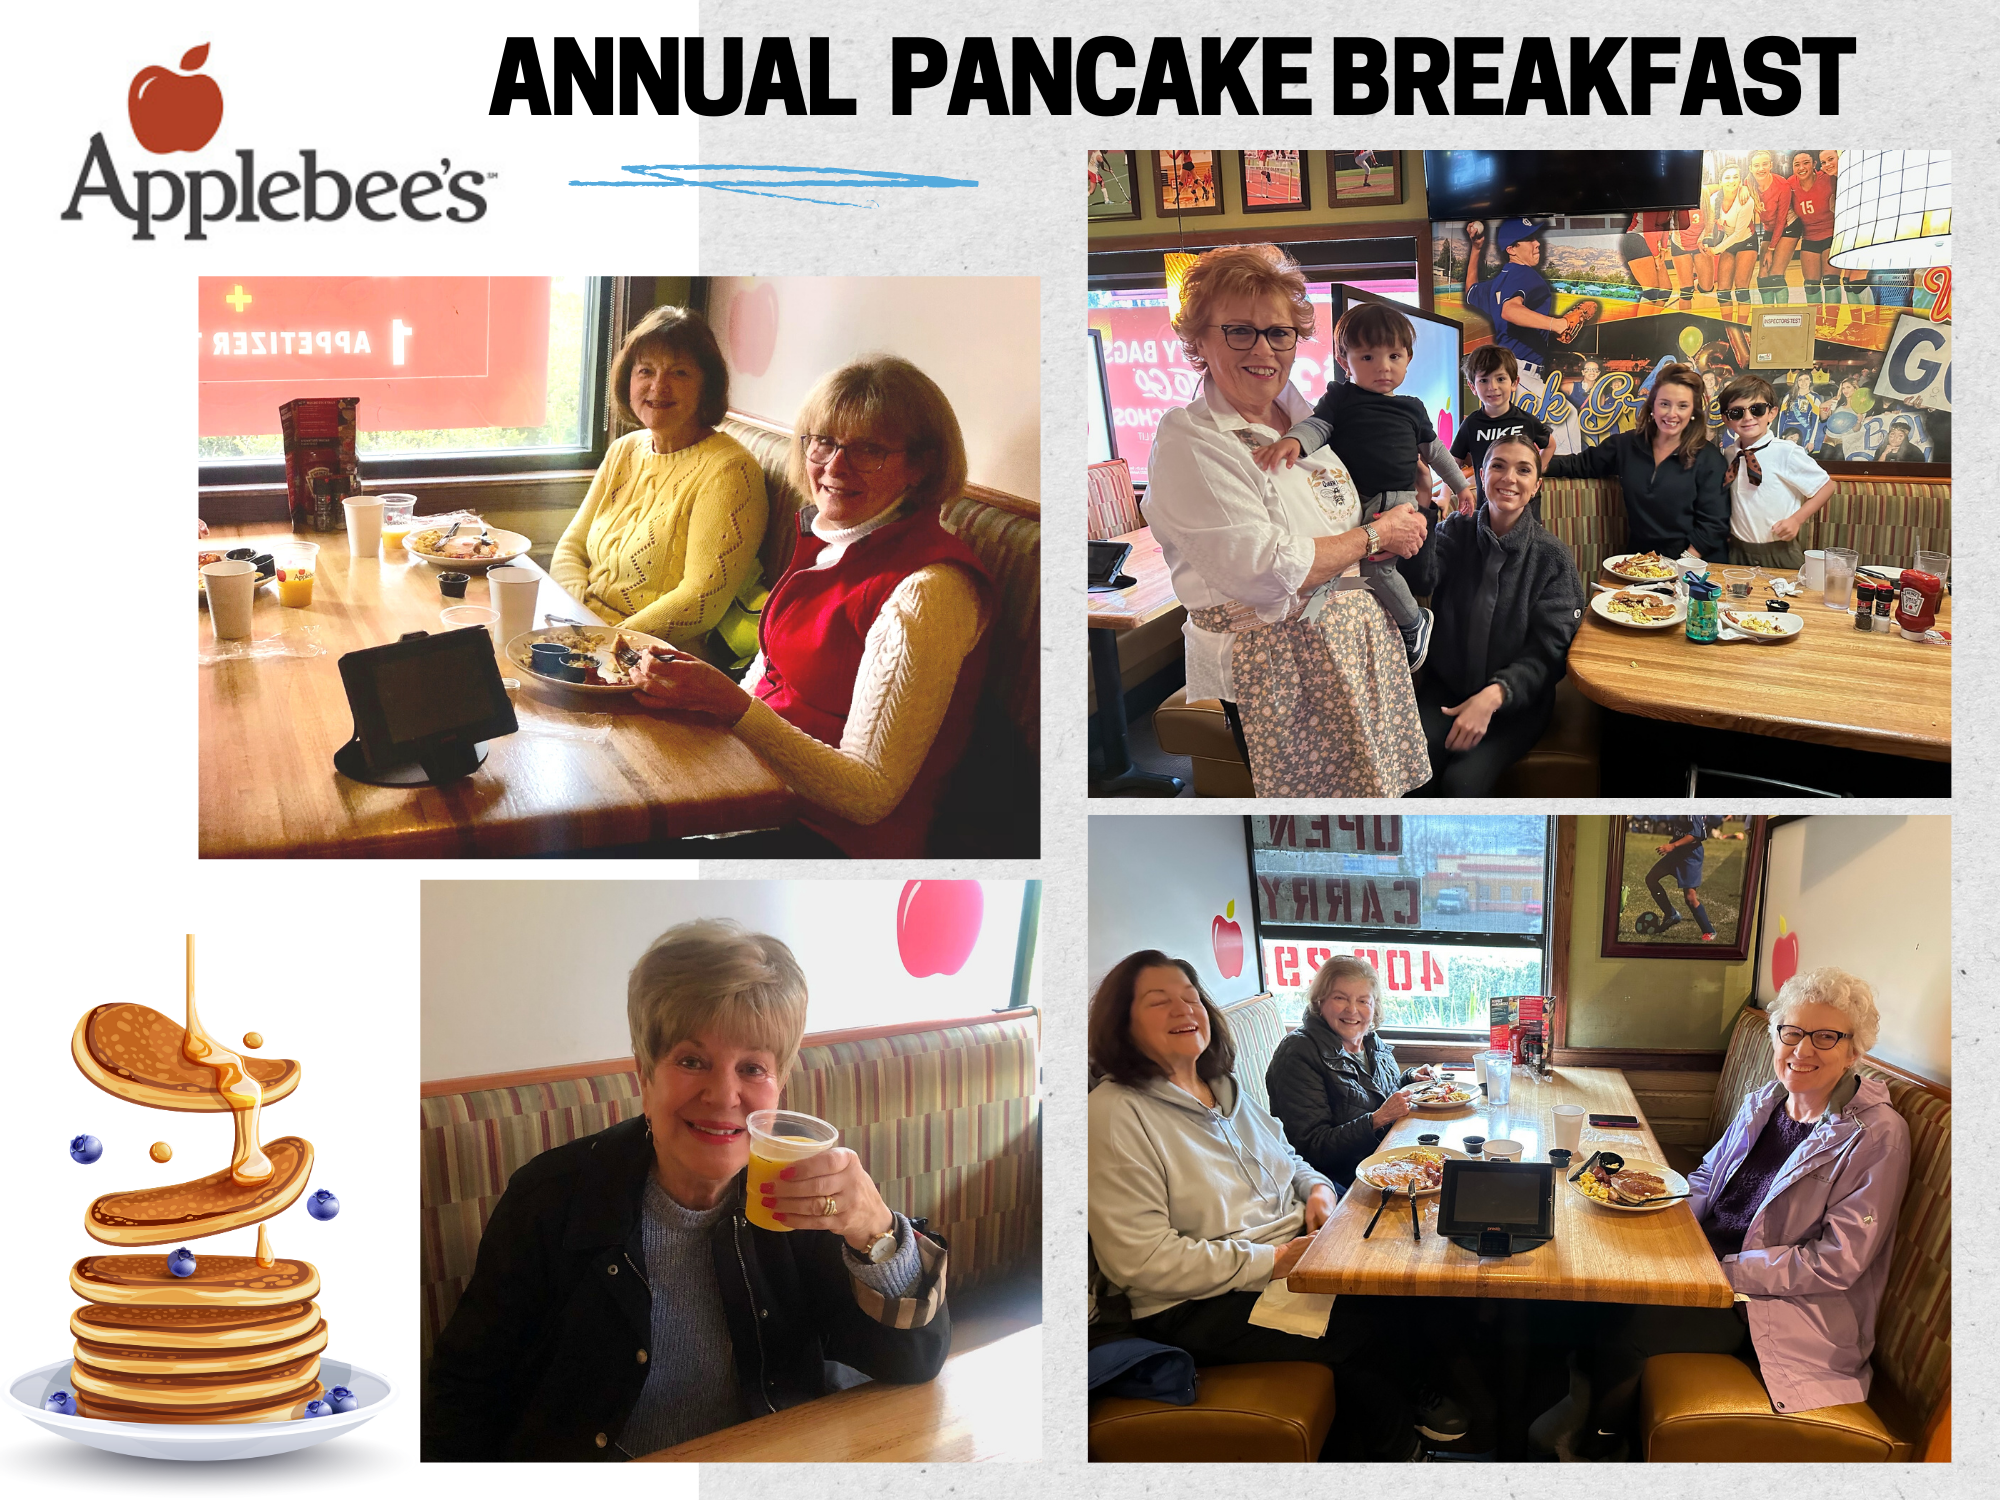 Applebee's Pancake Breakfast